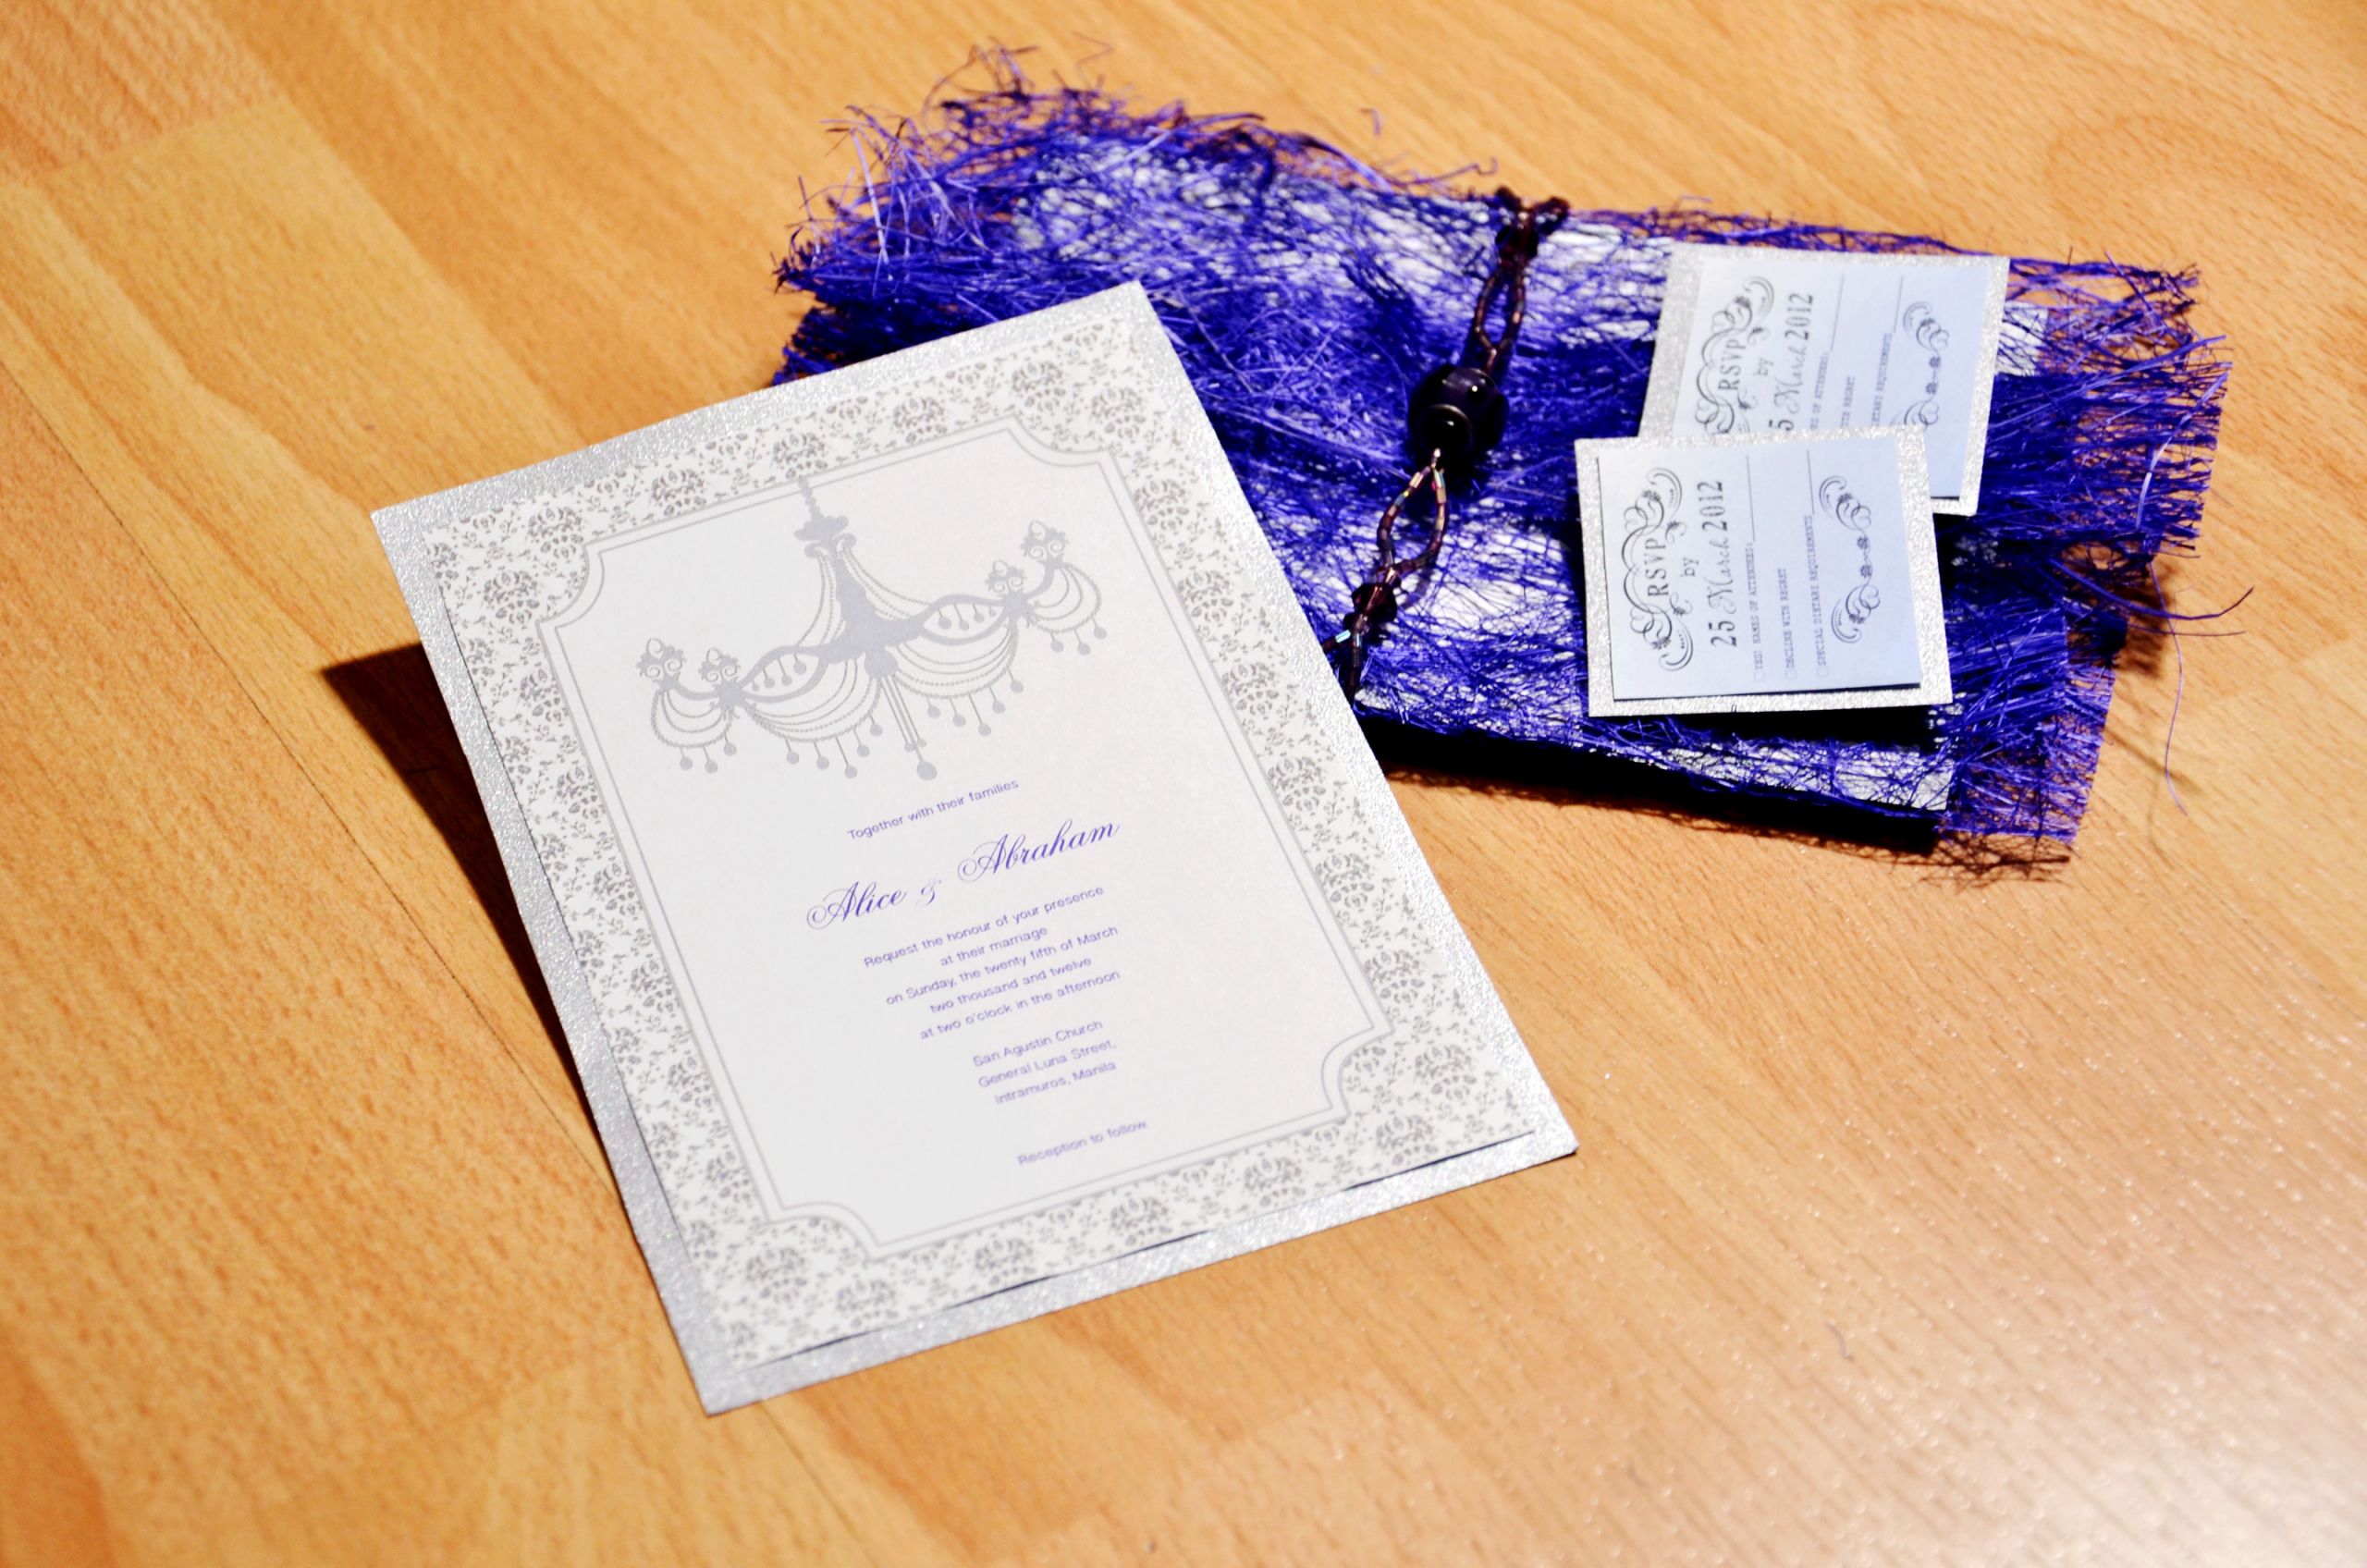 Cheap DIY Wedding Invitations
 3 Ways to Make Cheap Homemade Wedding Invitations wikiHow